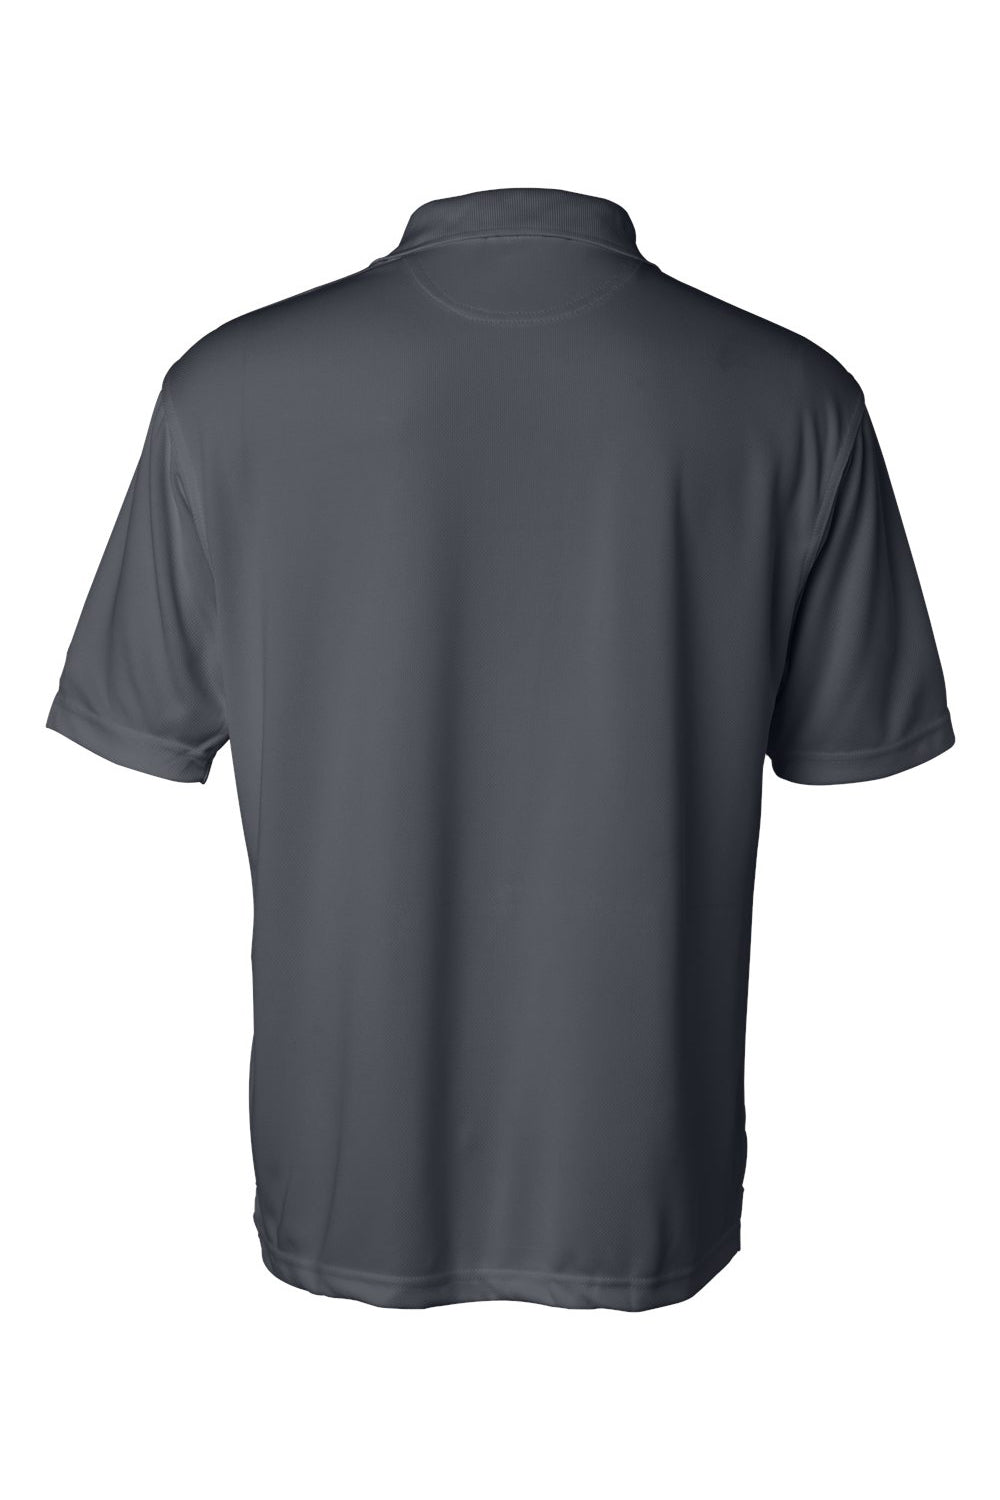 Sierra Pacific 0469 Mens Moisture Wish Mesh Short Sleeve Polo Shirt Steel Grey Flat Back